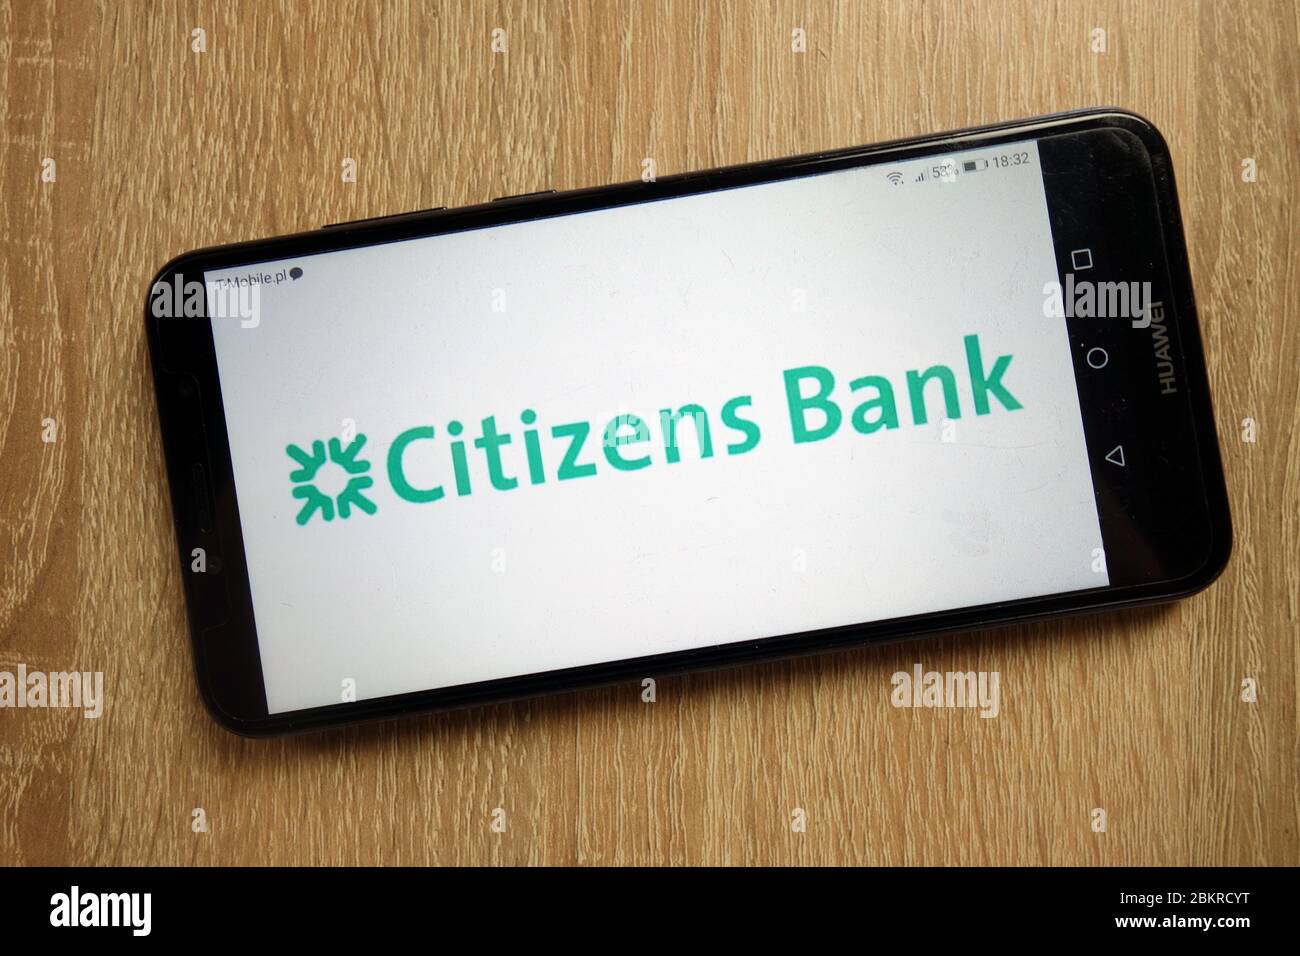 Citizens Bank logo displayed on smartphone Stock Photo